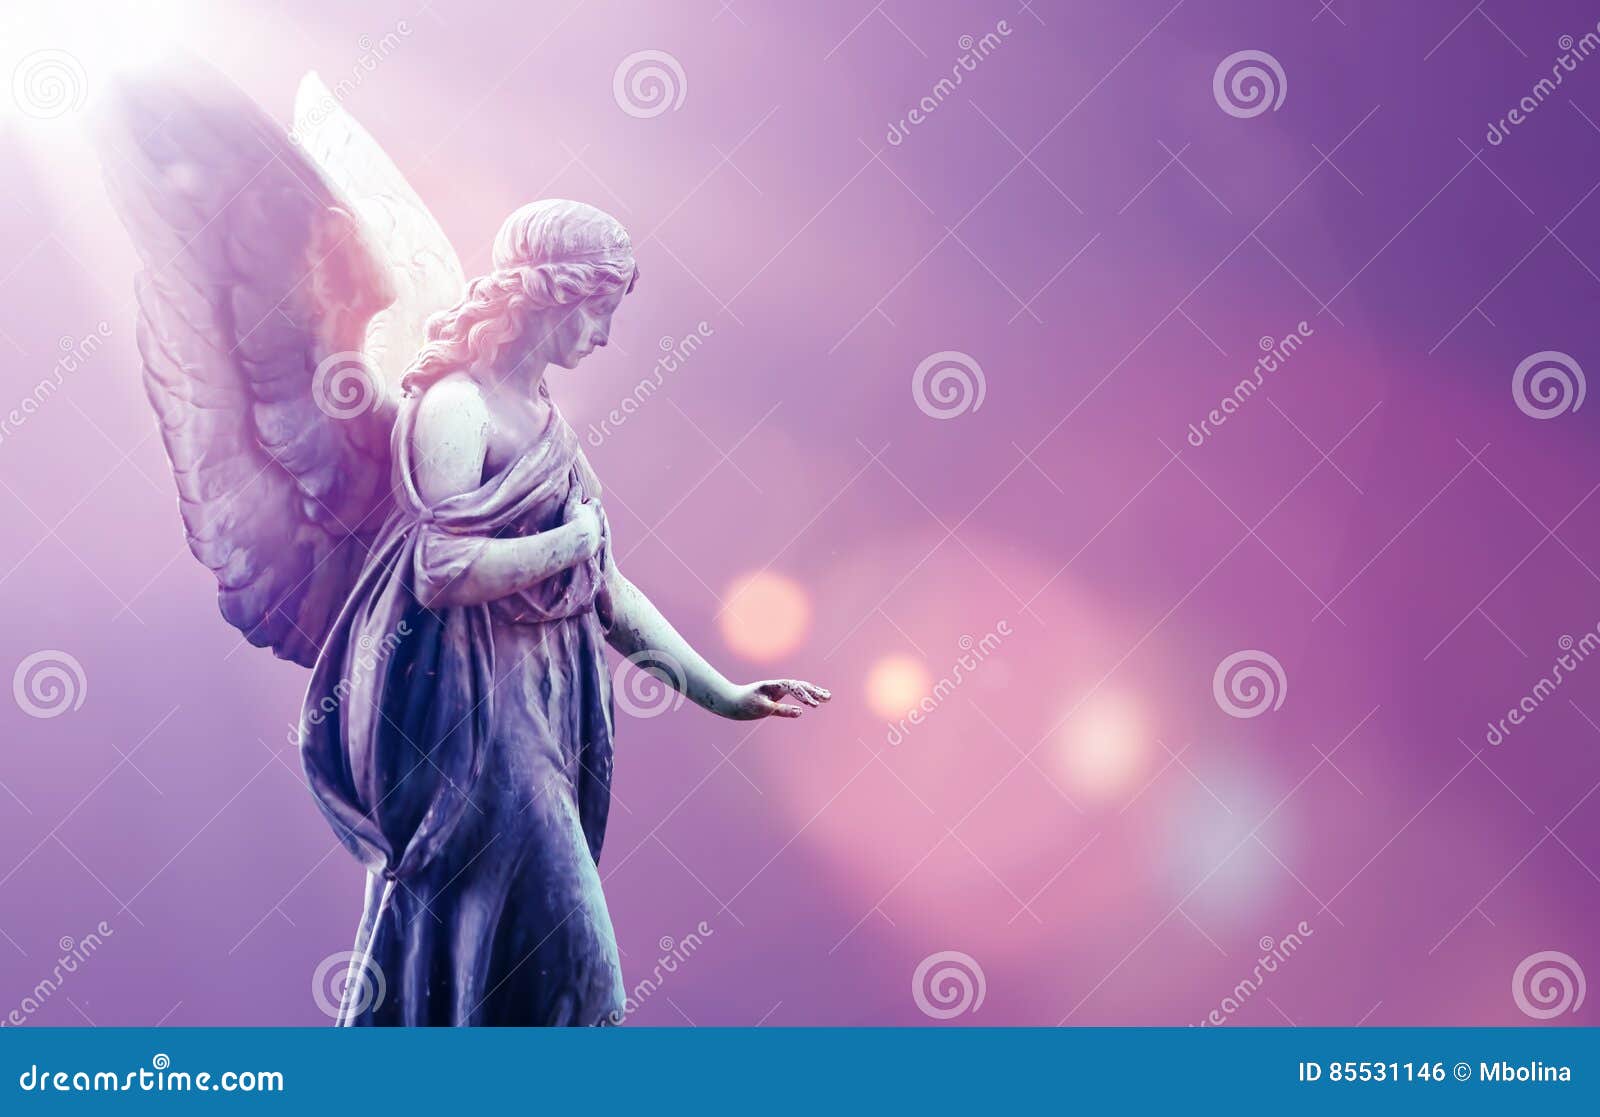 angel in heaven over purple sky background